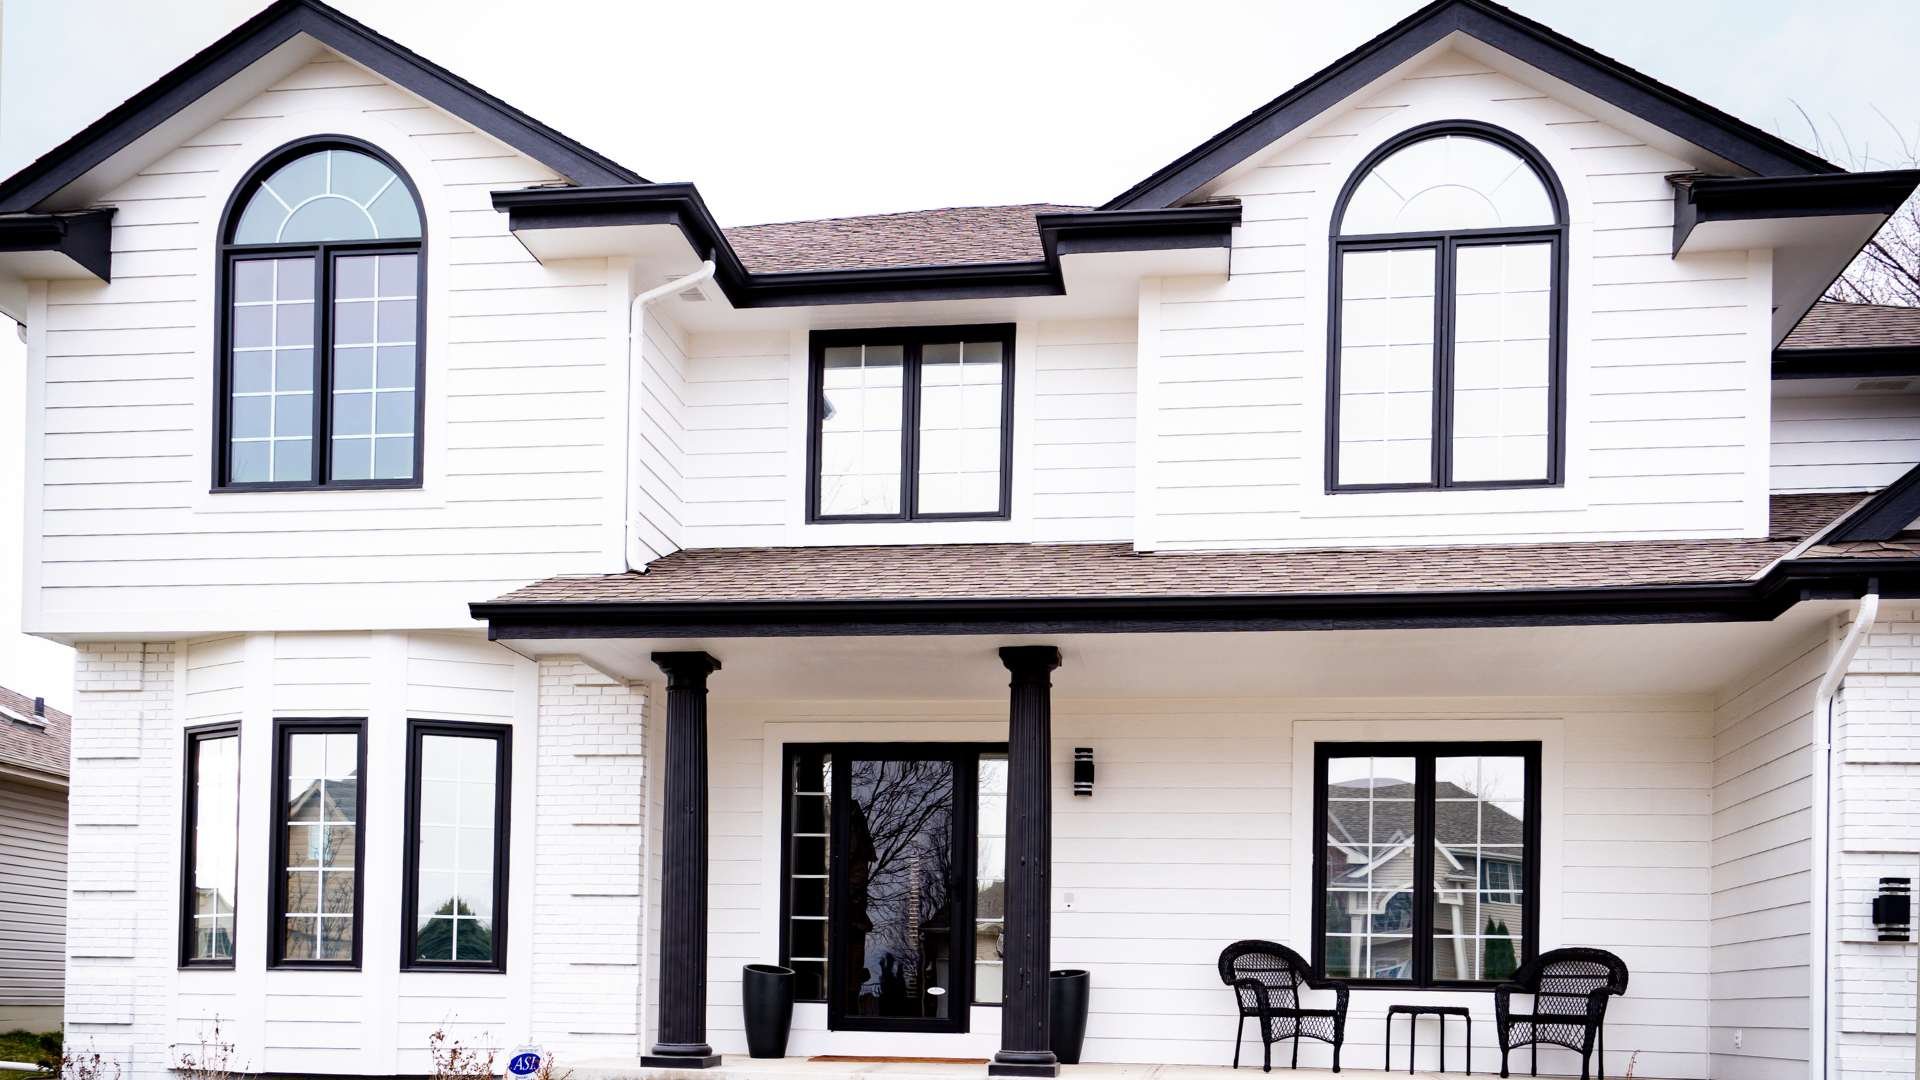 White exterior of home with black trim.